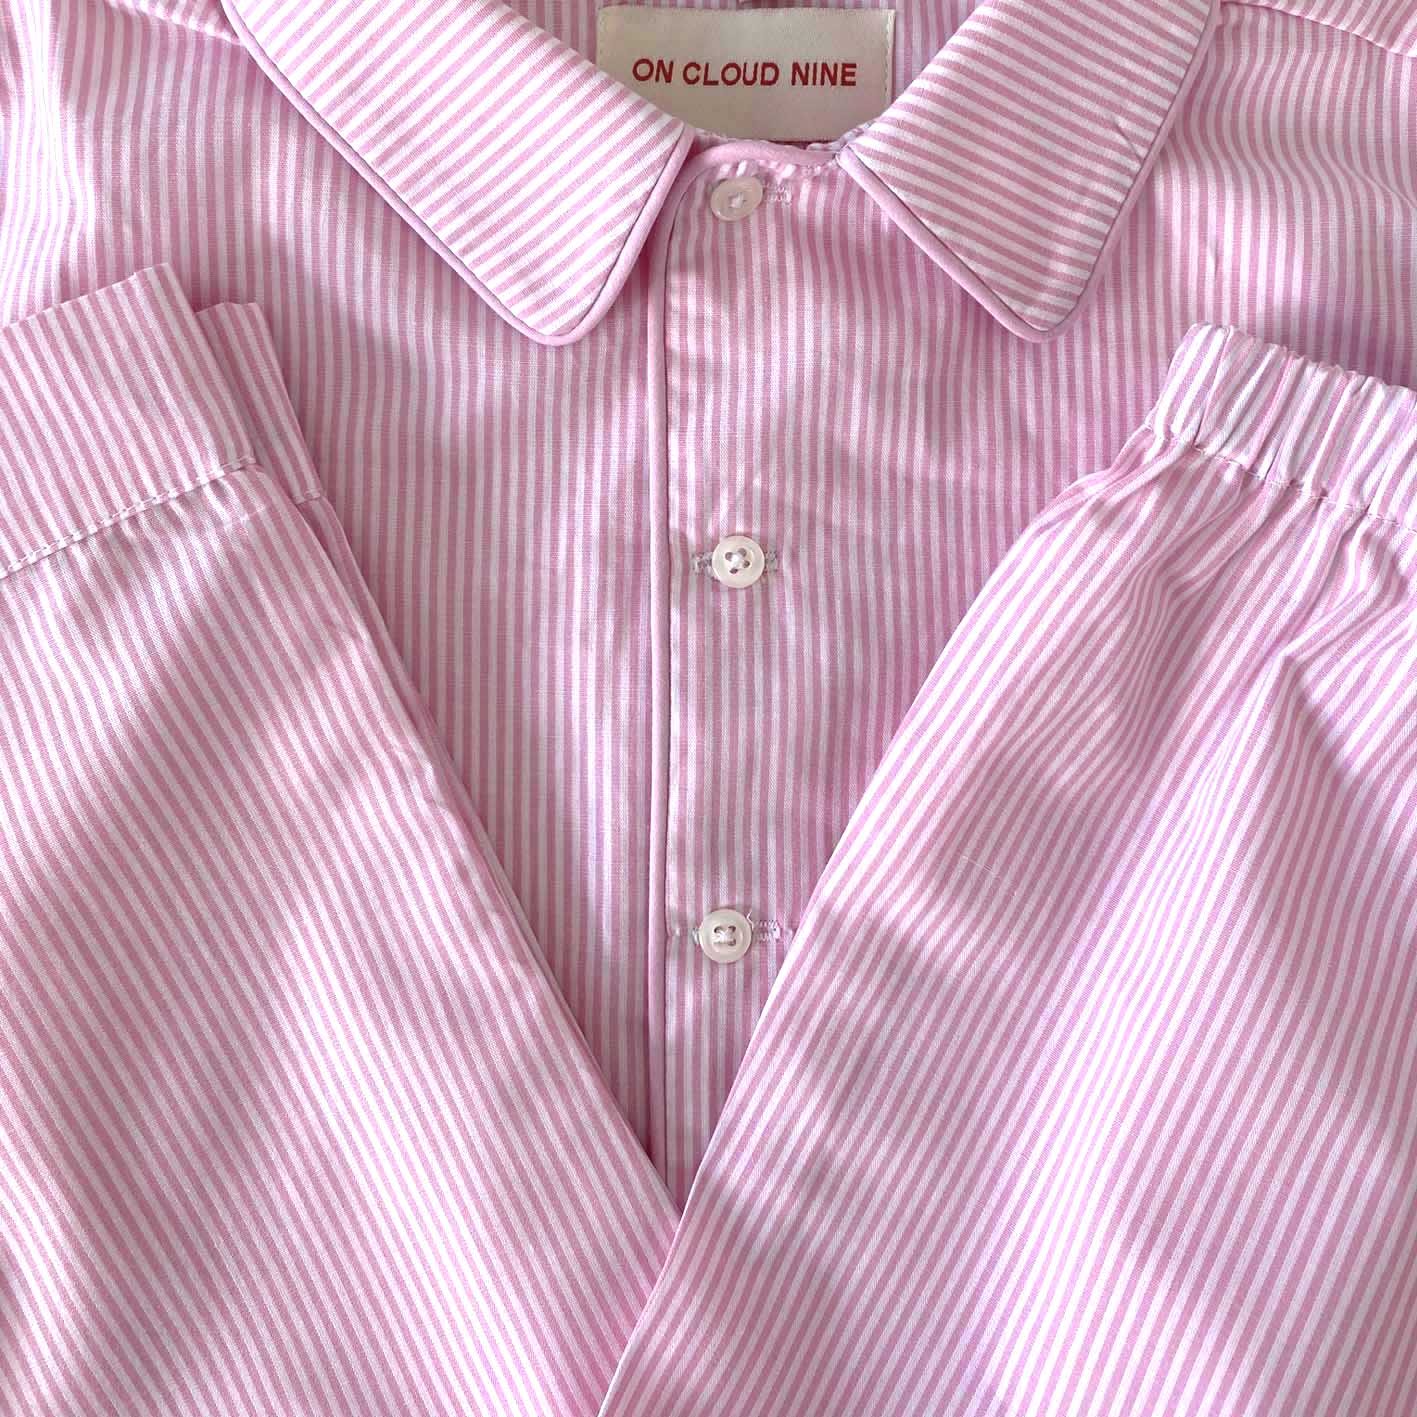 Kids pajama set pink stripe